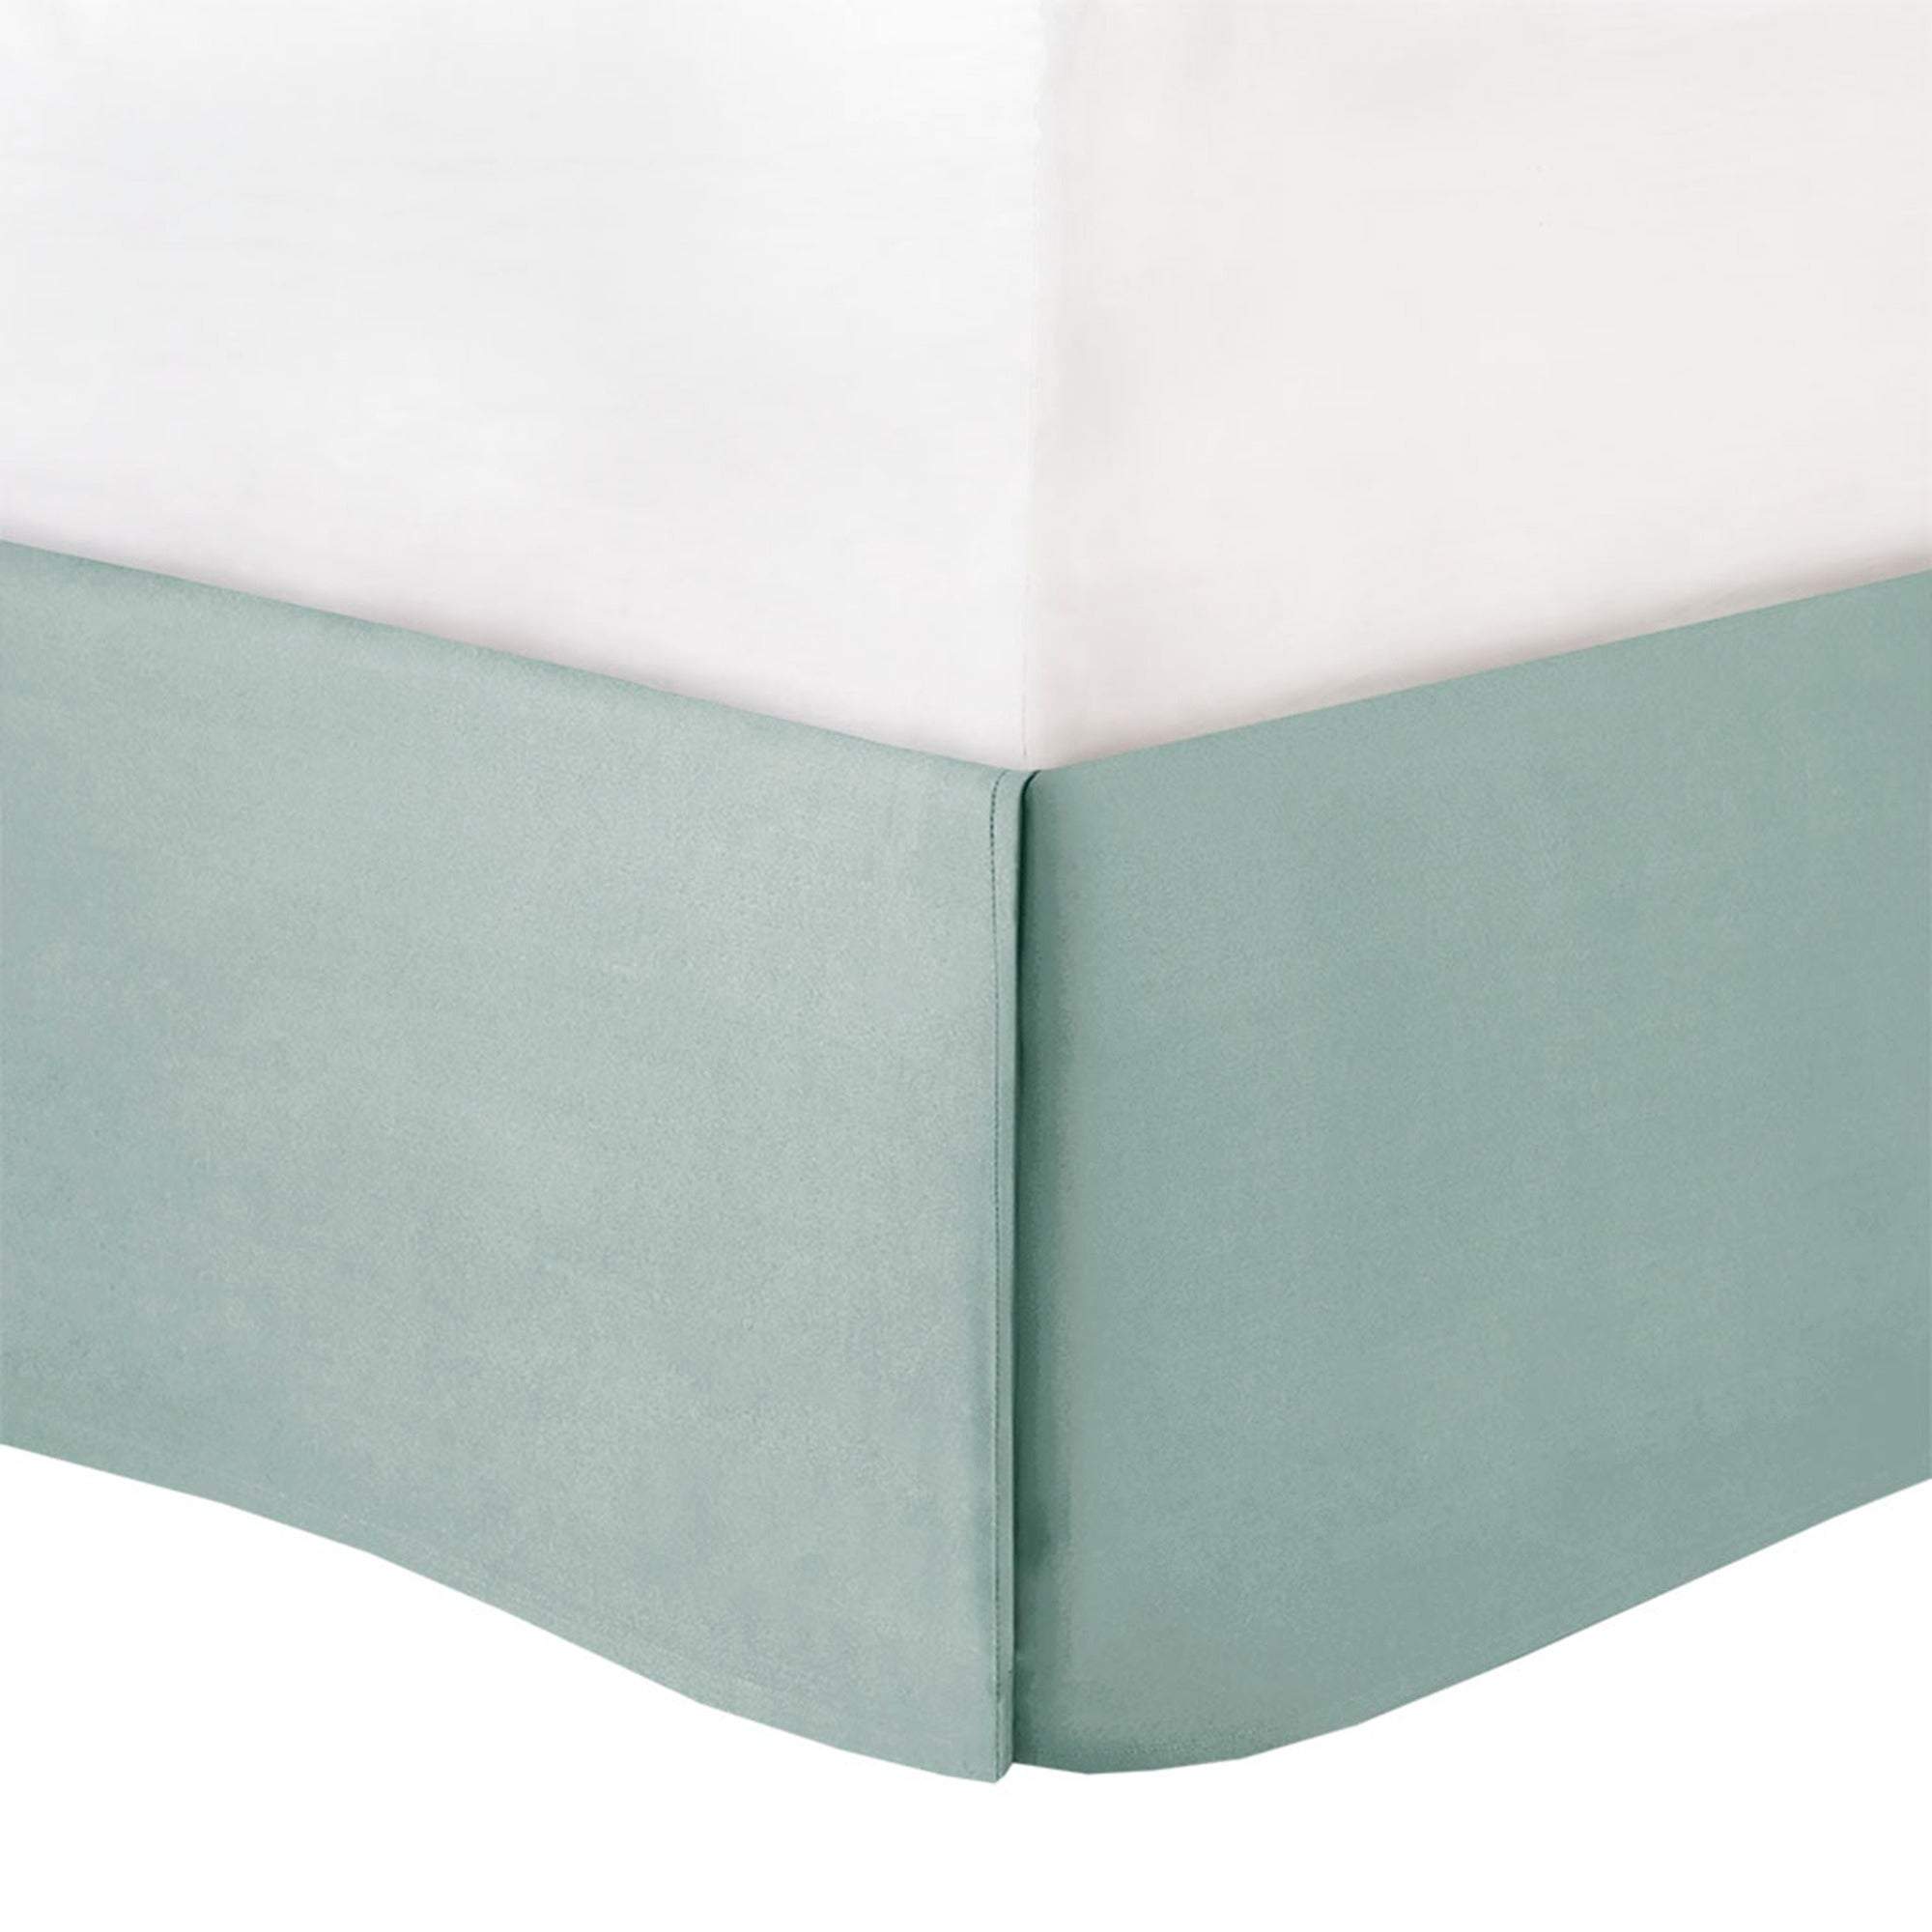 Tennessee Aqua 8-Piece Comforter Set Comforter Sets By Olliix/JLA HOME (E & E Co., Ltd)